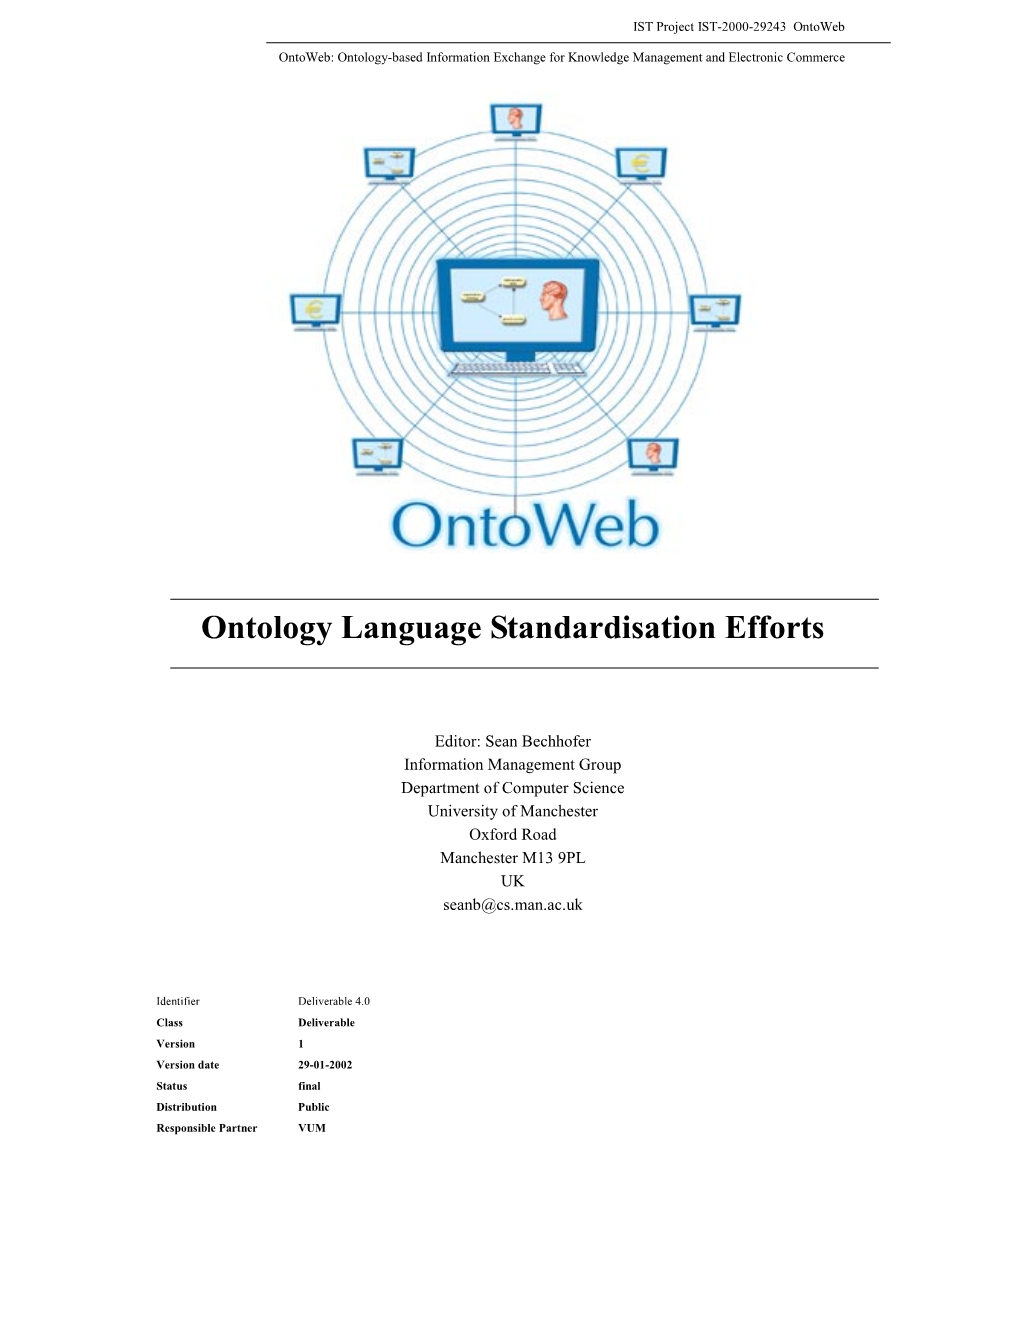 Ontology Language Standardisation Efforts